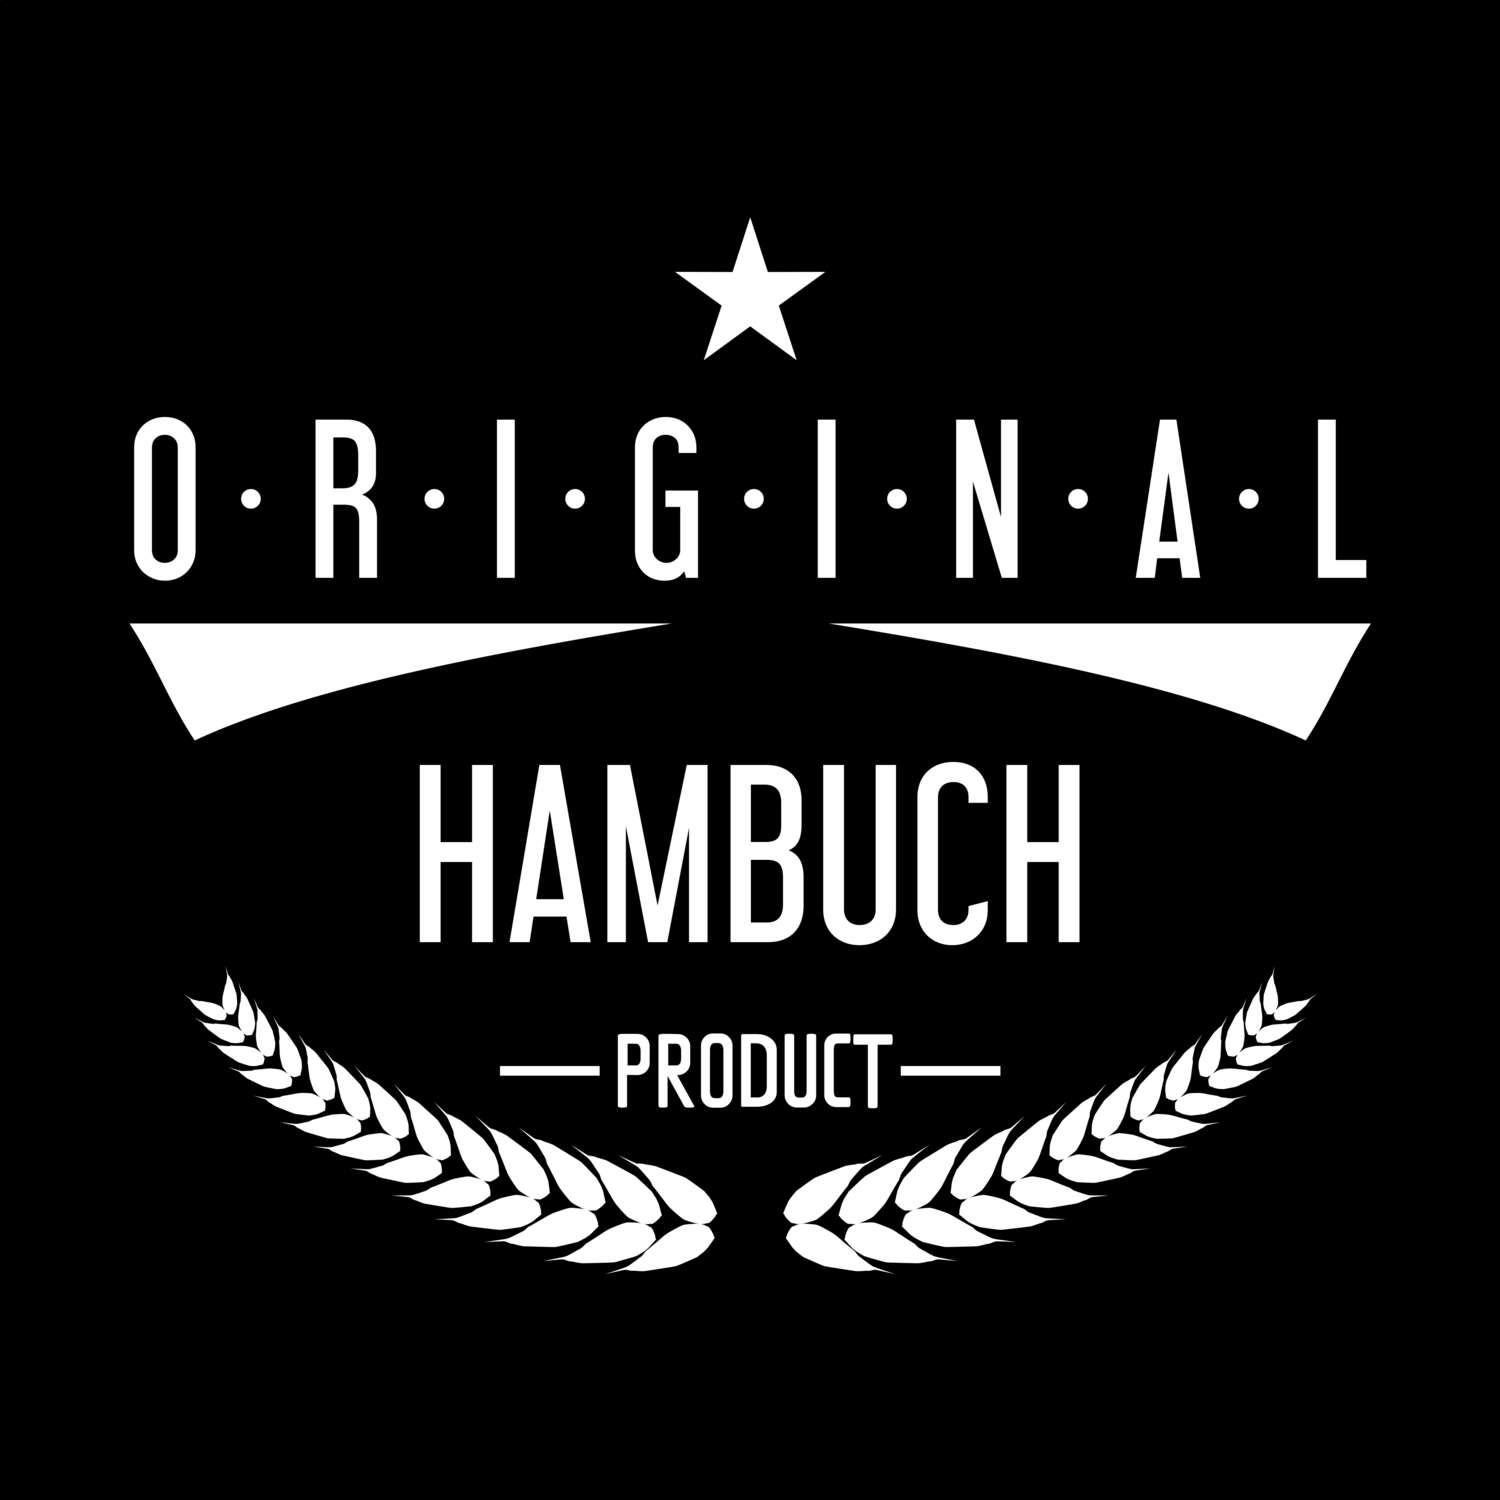 Hambuch T-Shirt »Original Product«